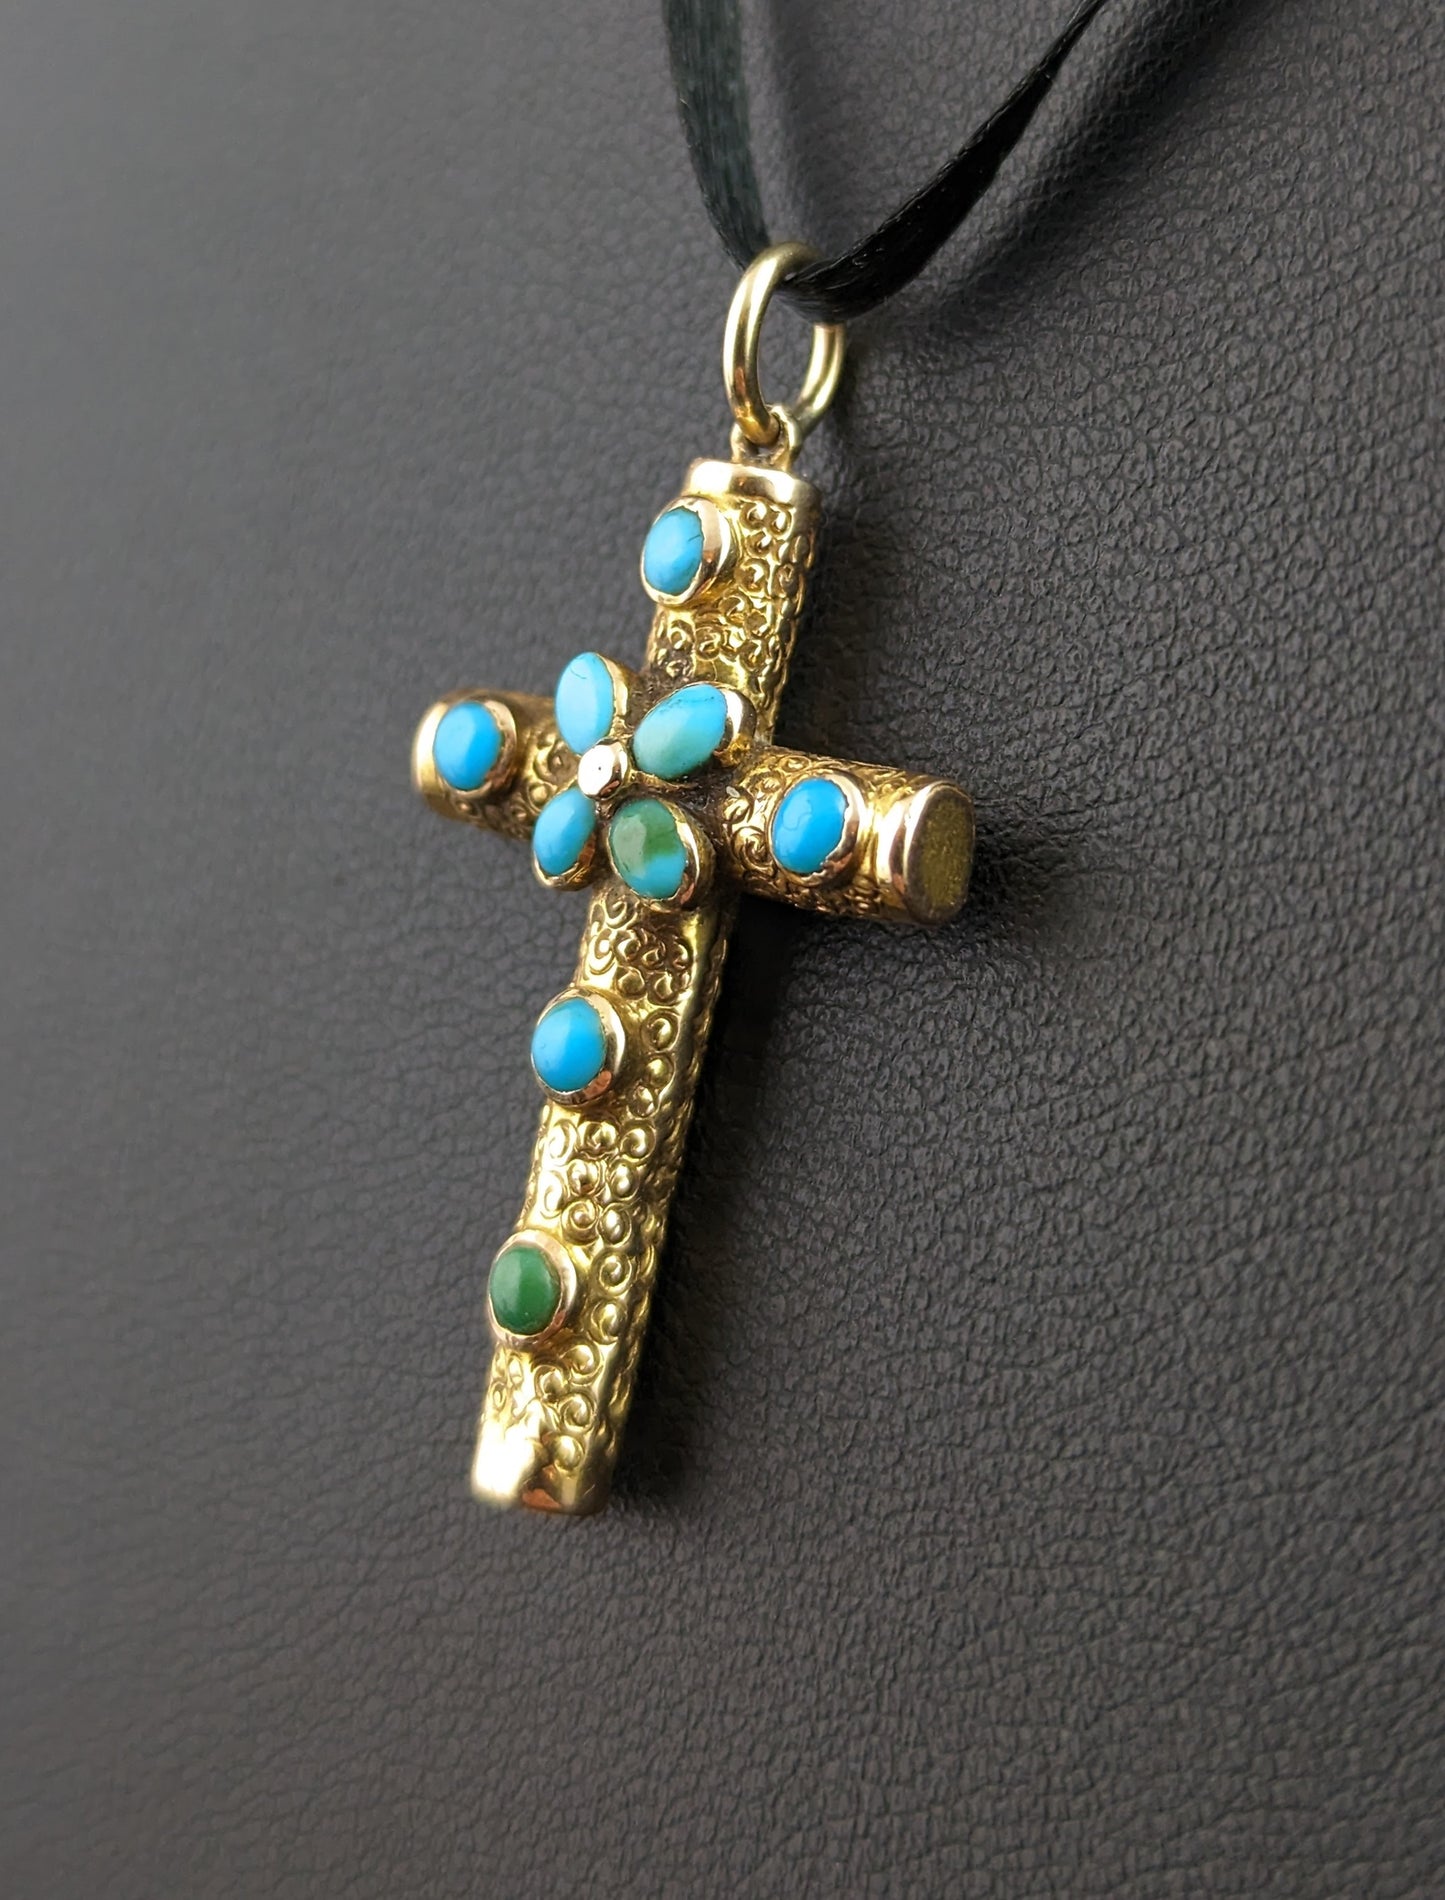 Antique Turquoise Cross pendant, 9ct gold, Victorian